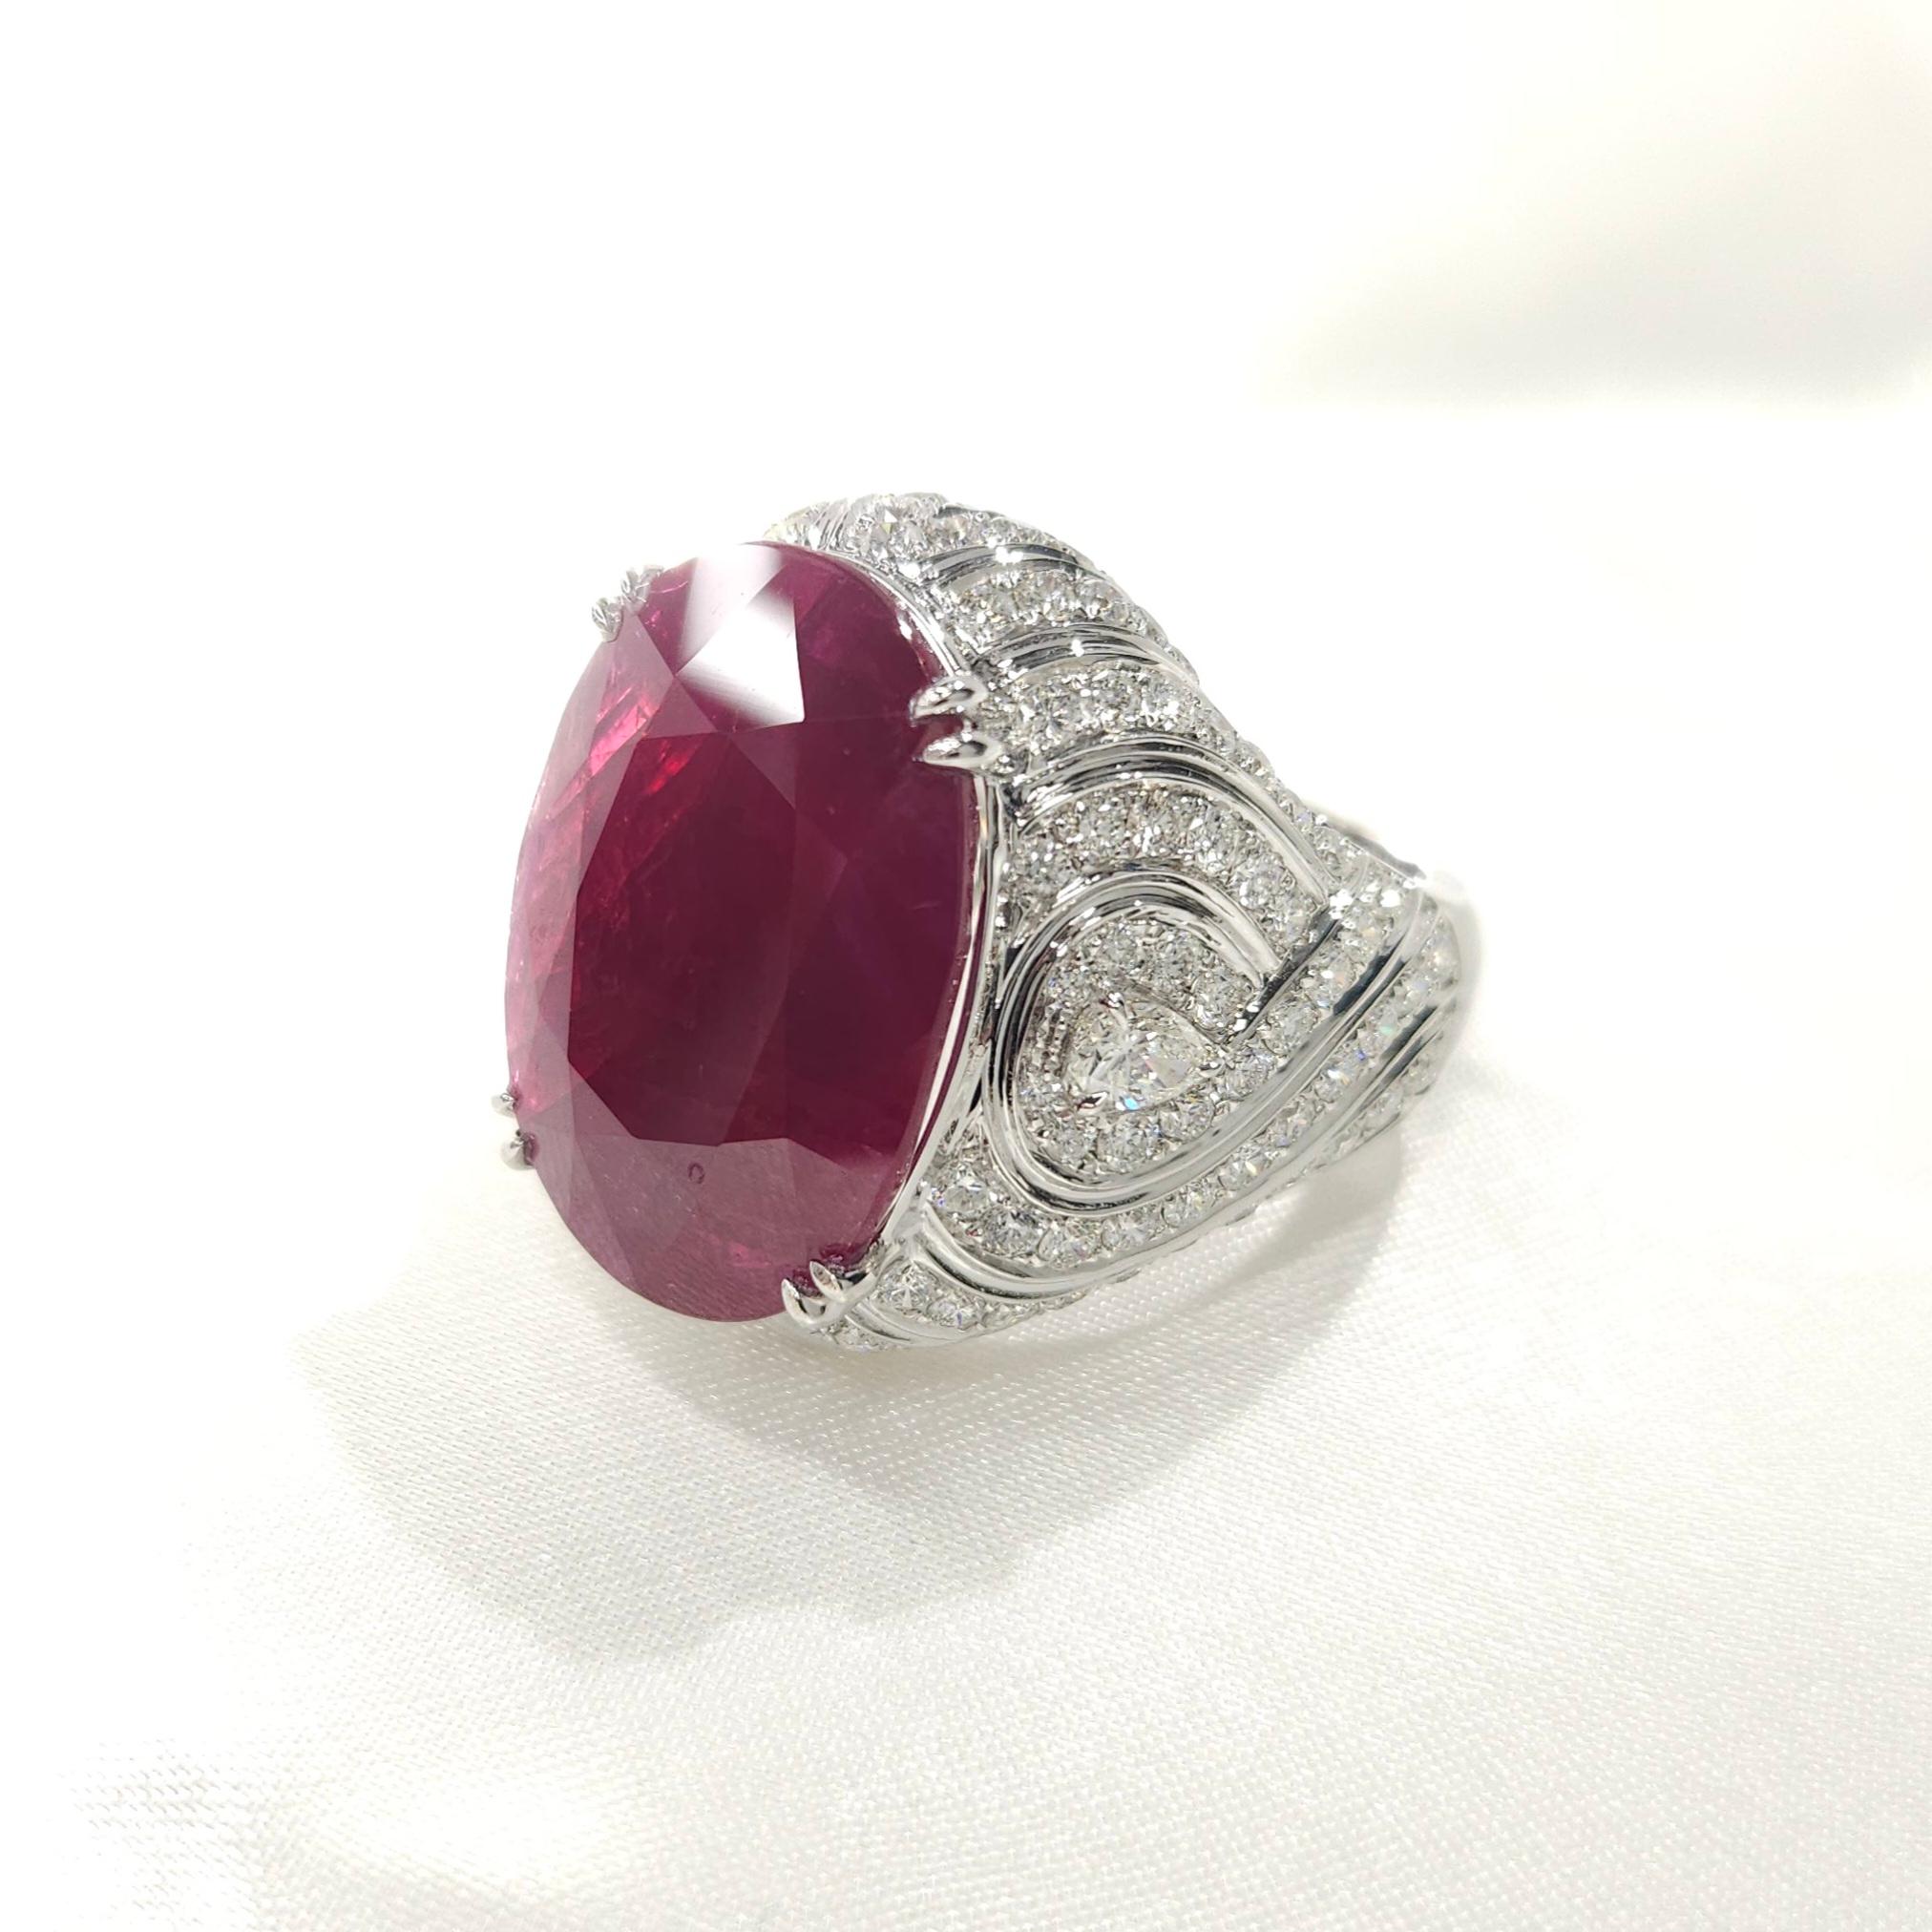 IGI Certified Rare 25.49 Carat Burma Ruby & Diamond Ring in 18K White Gold For Sale 8